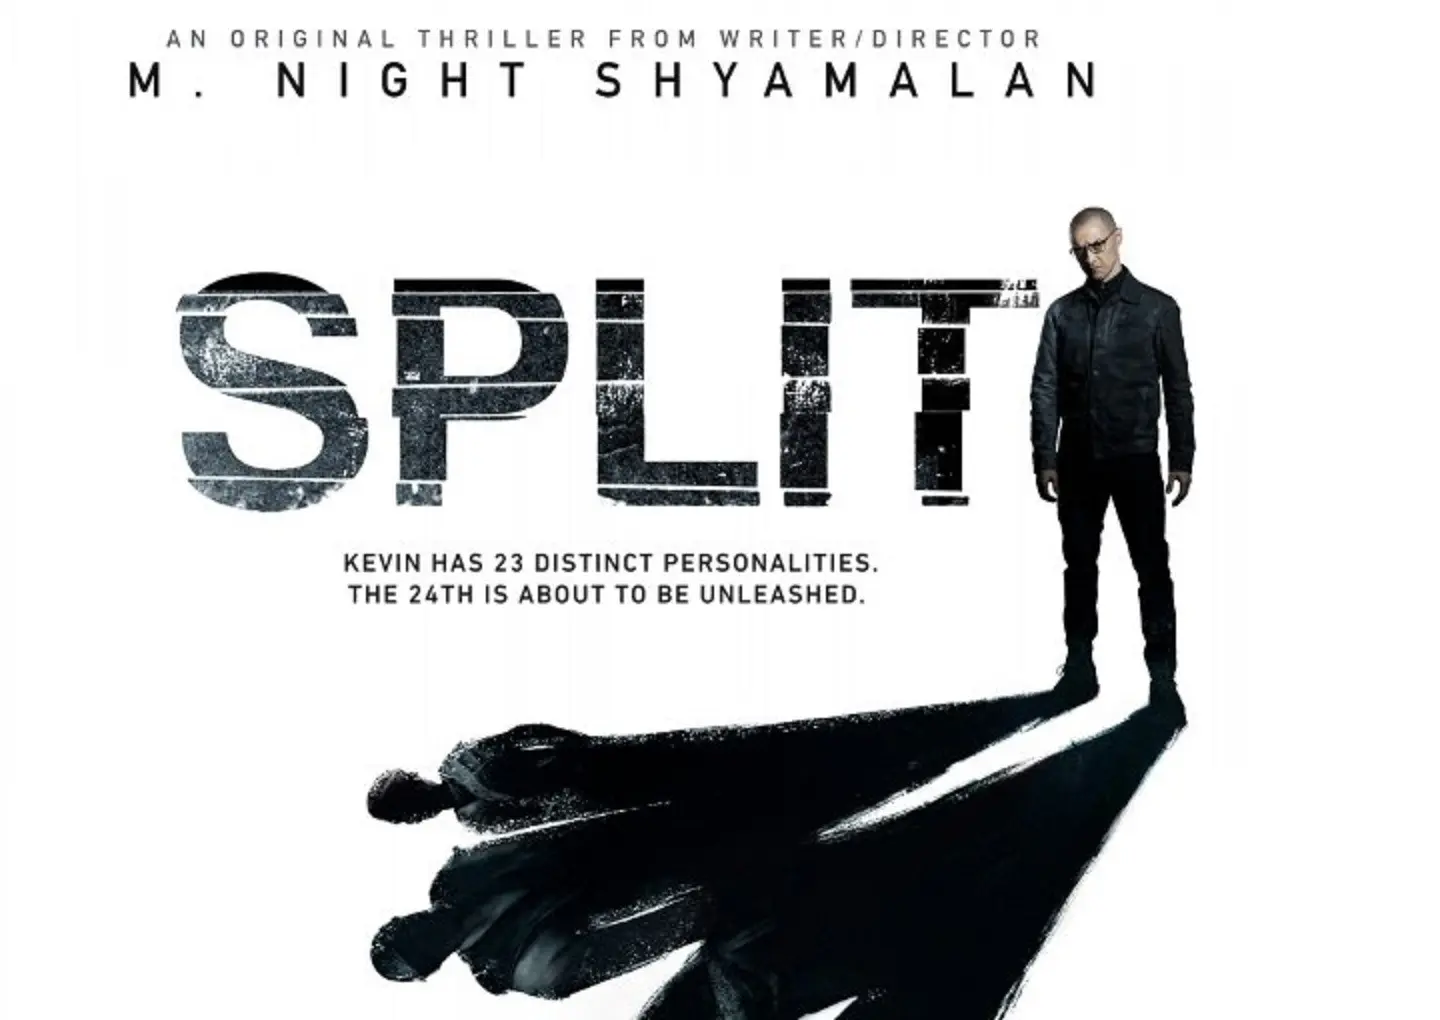 Film Split (IMDb)